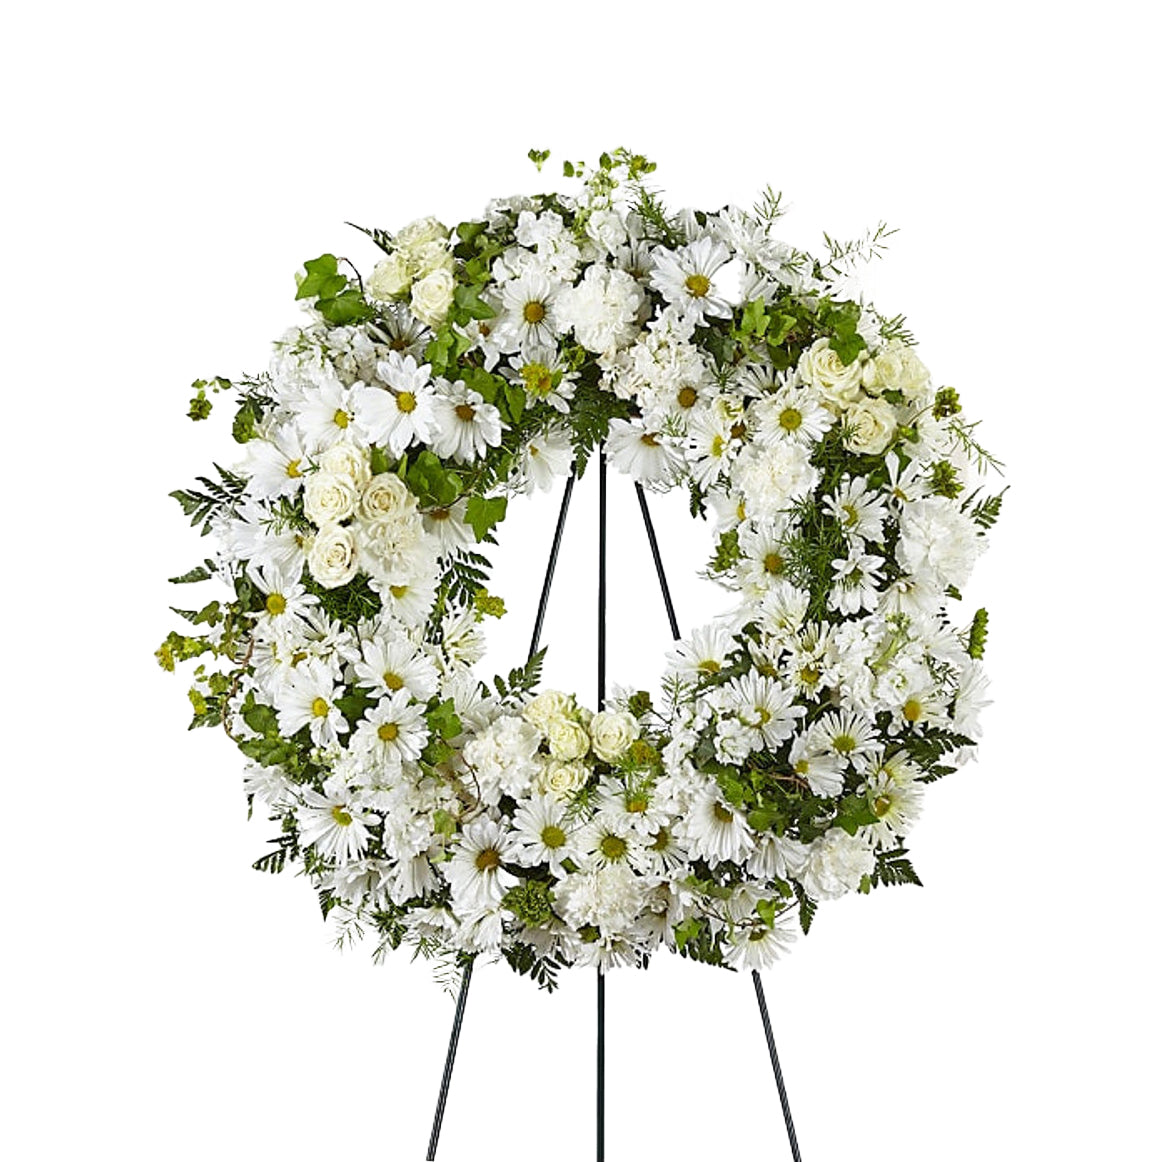 Faithful Wishes Memorial Wreath